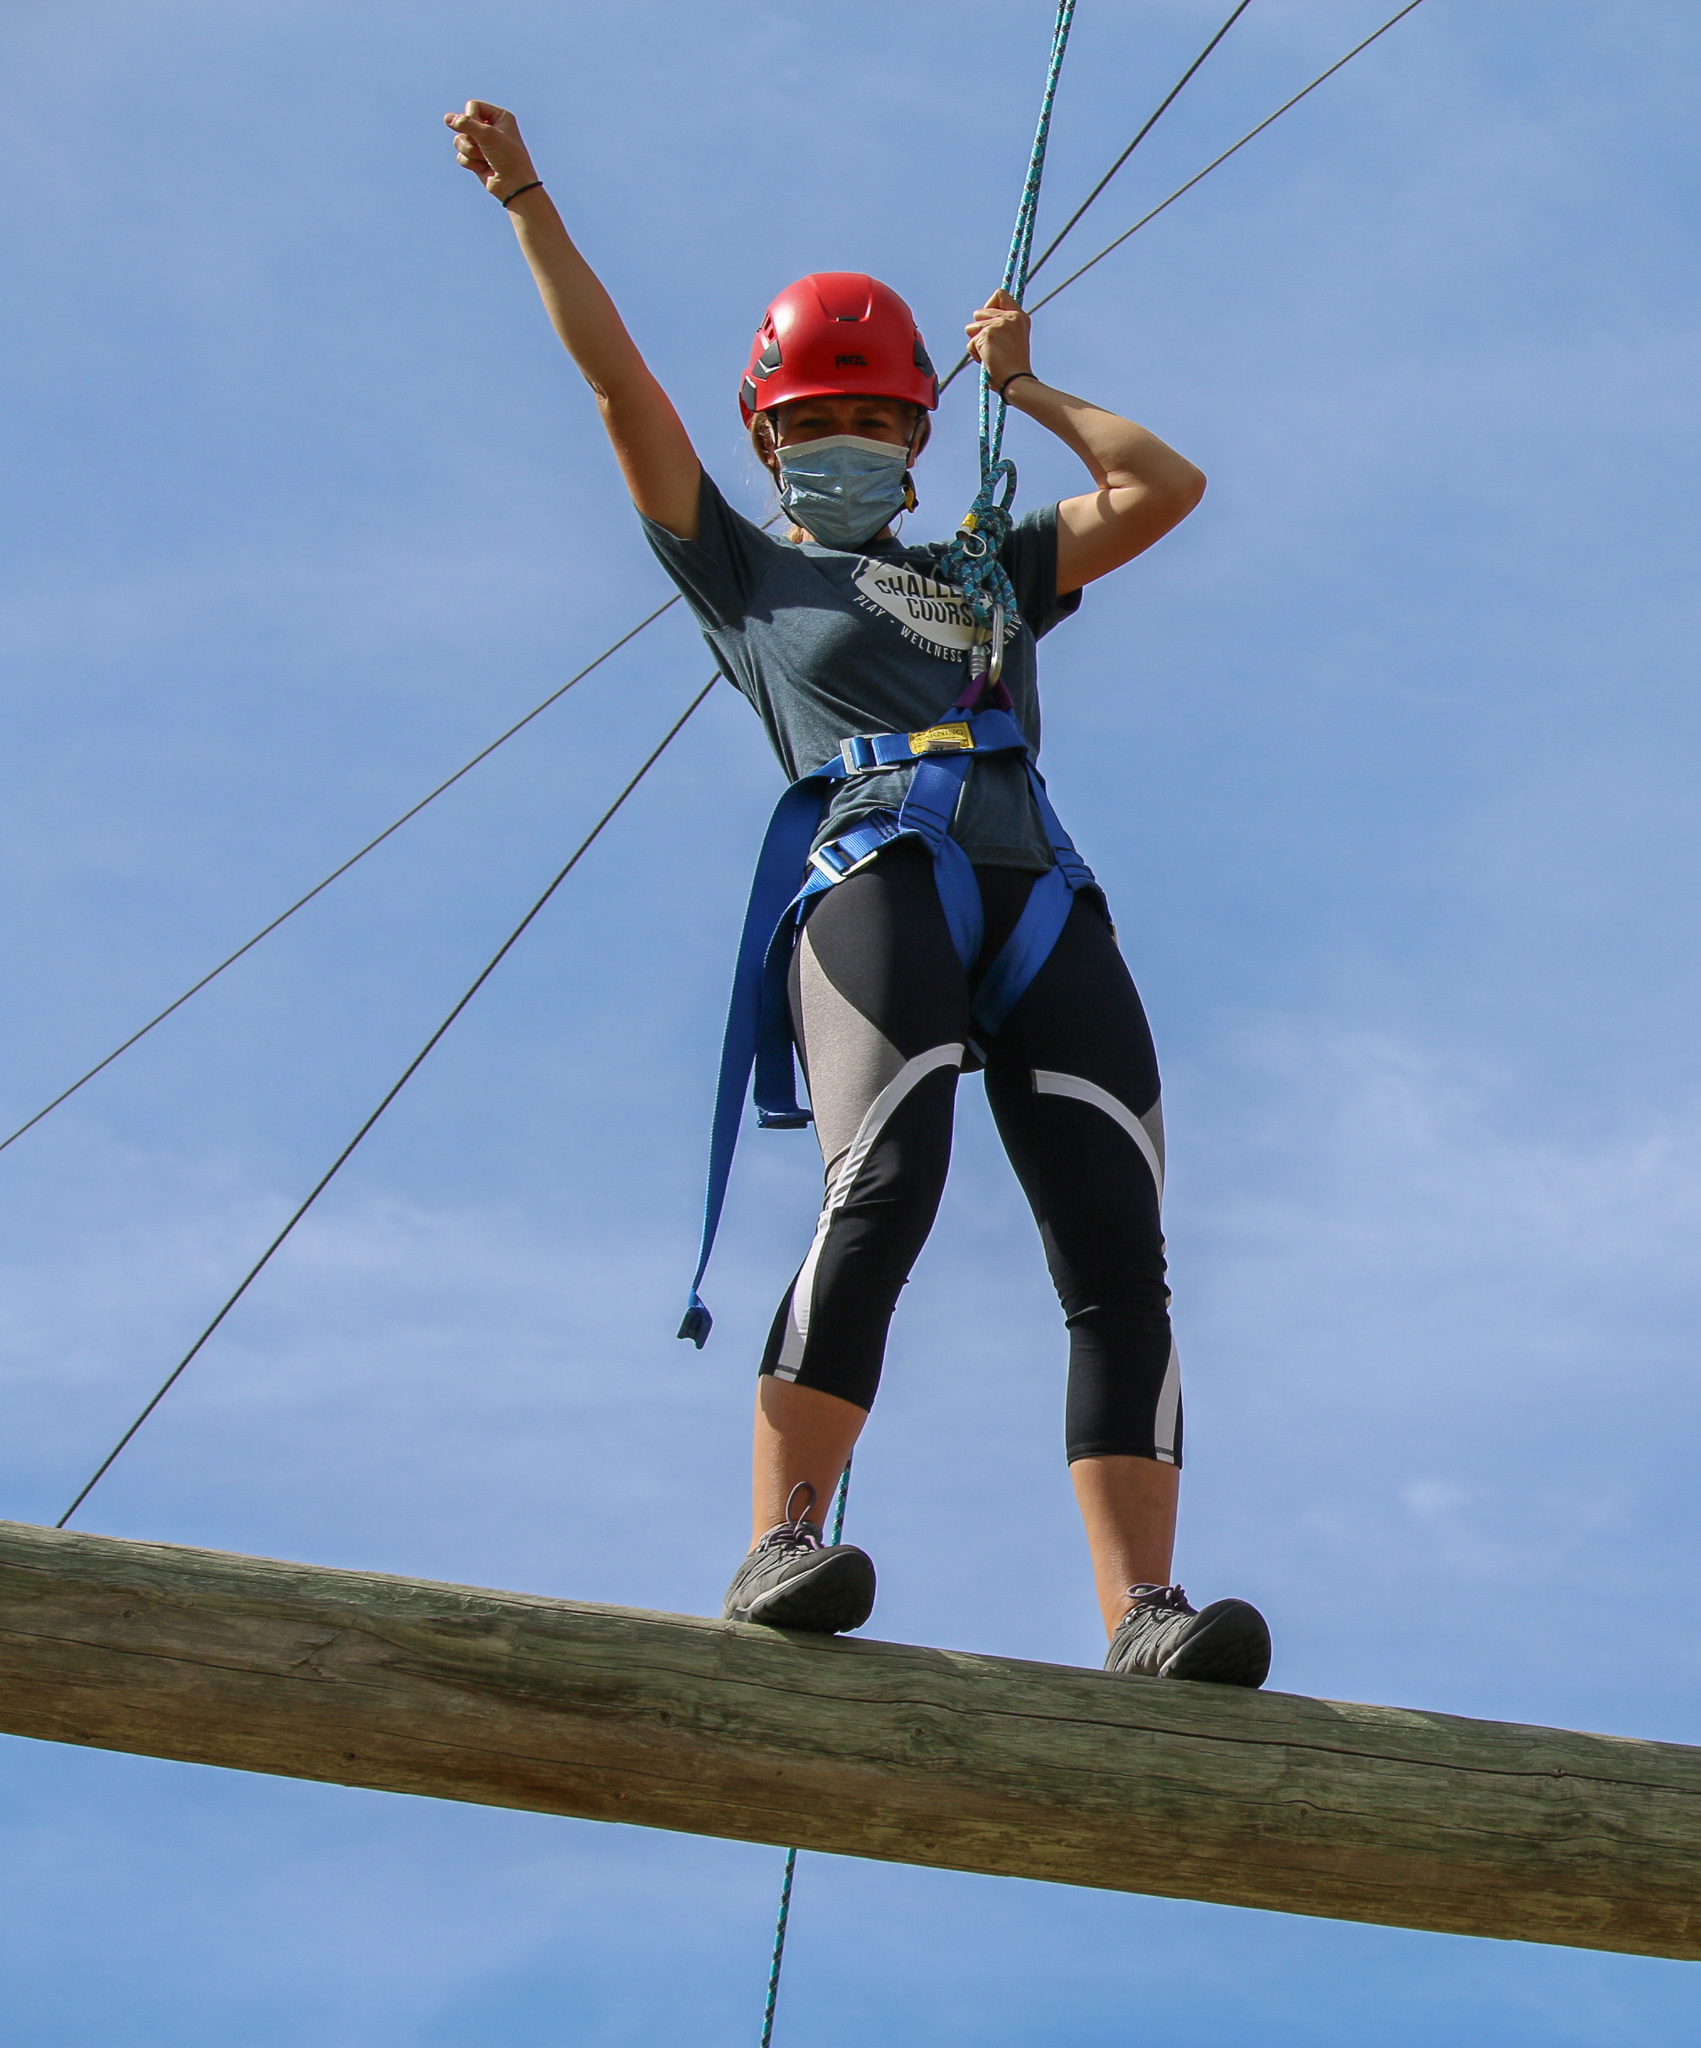 ziplining on the challenge course